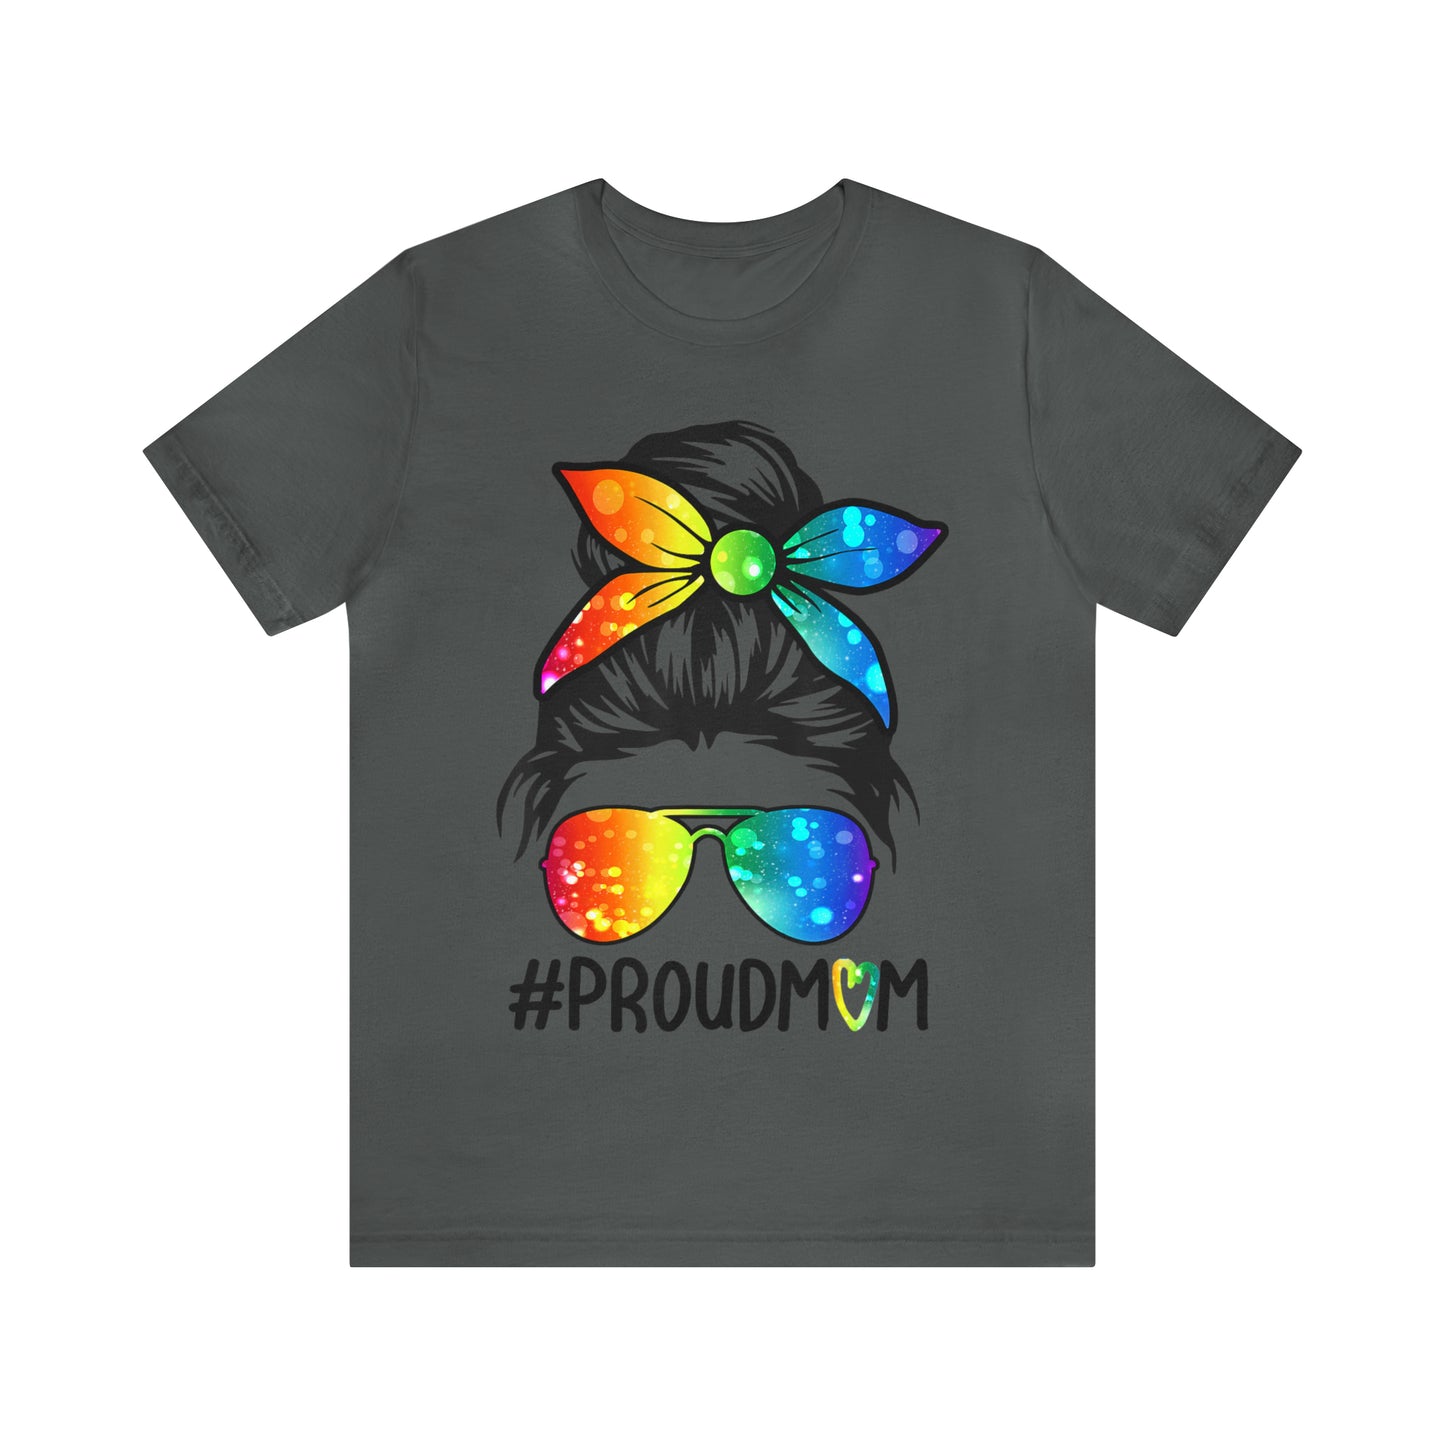 Proud Mom - Unisex T-Shirt